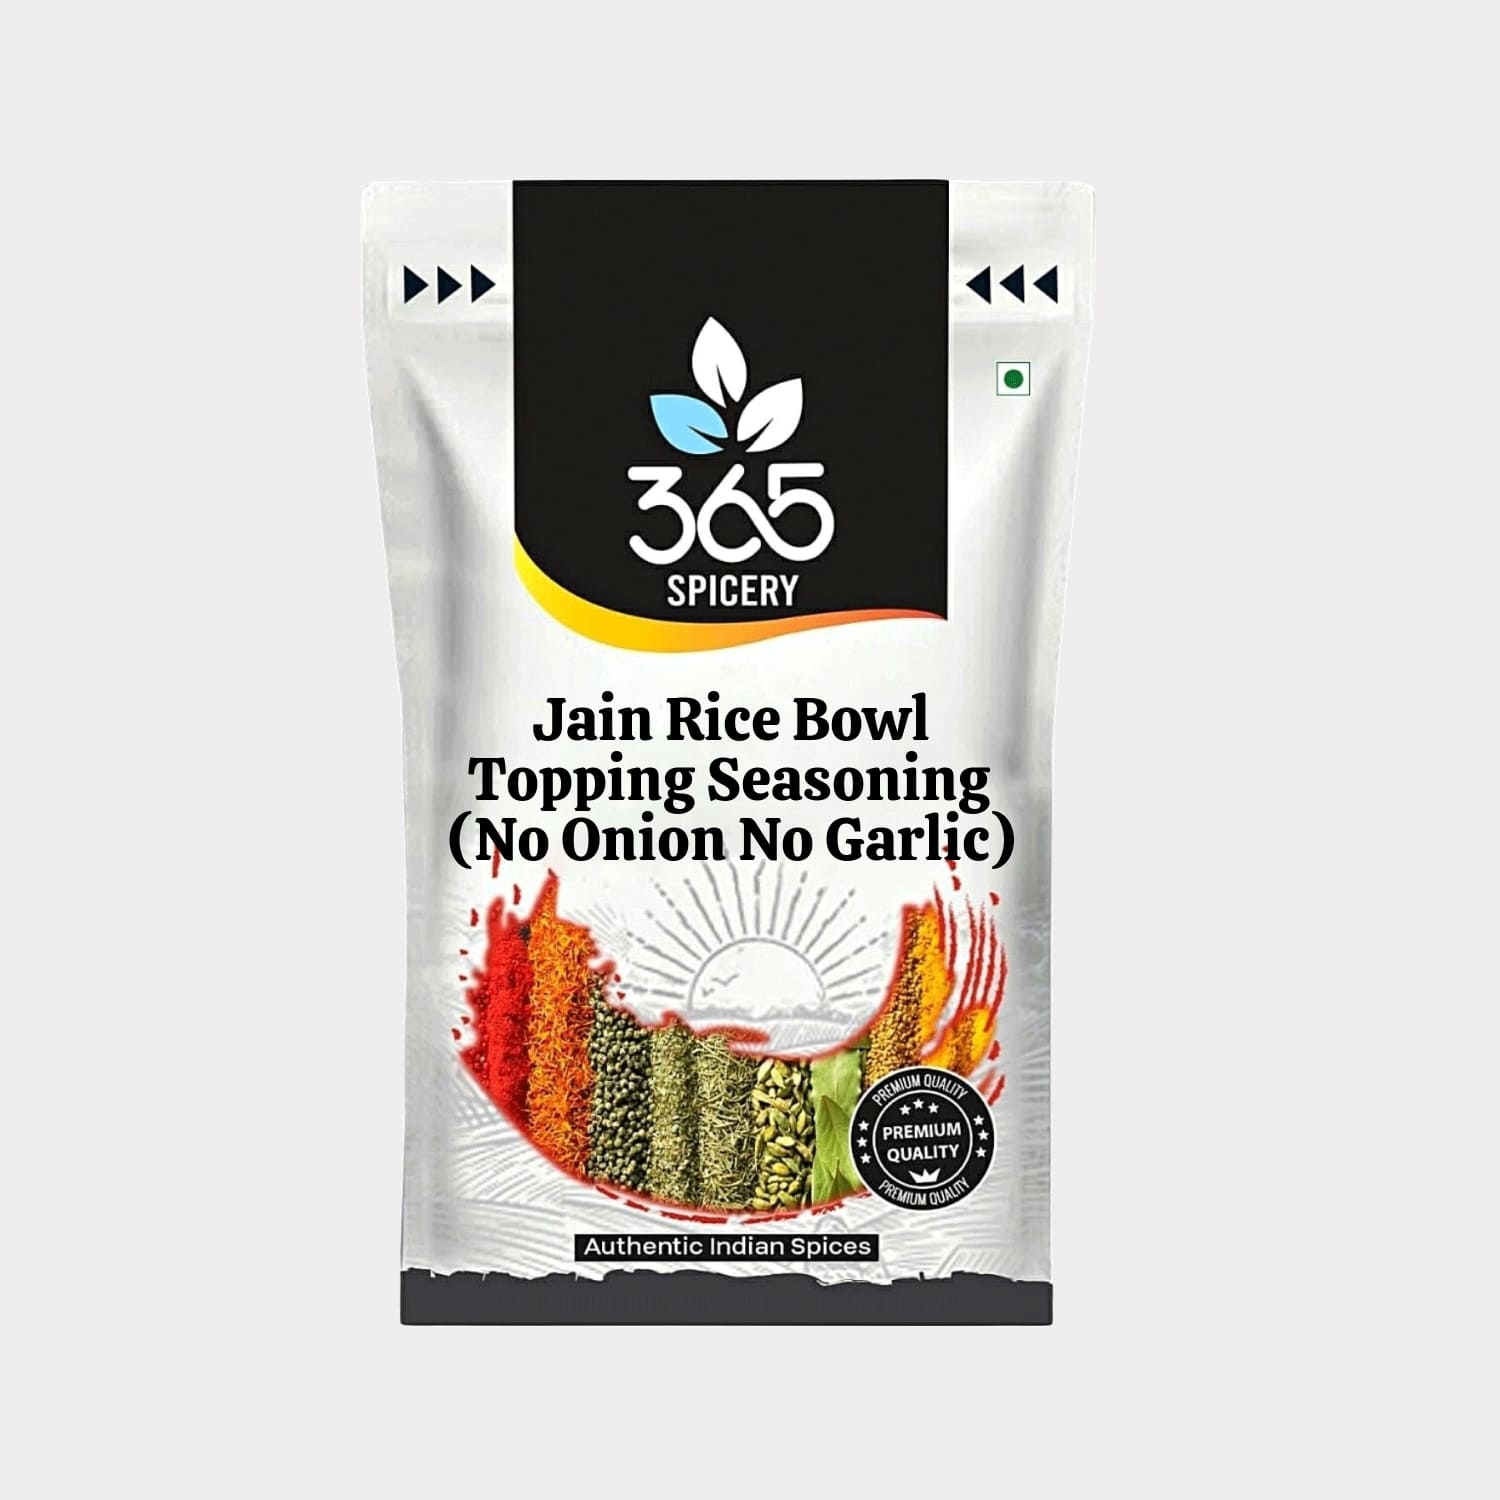 Jain Rice Bowl Topping Seasoning (No Onion No Garlic)